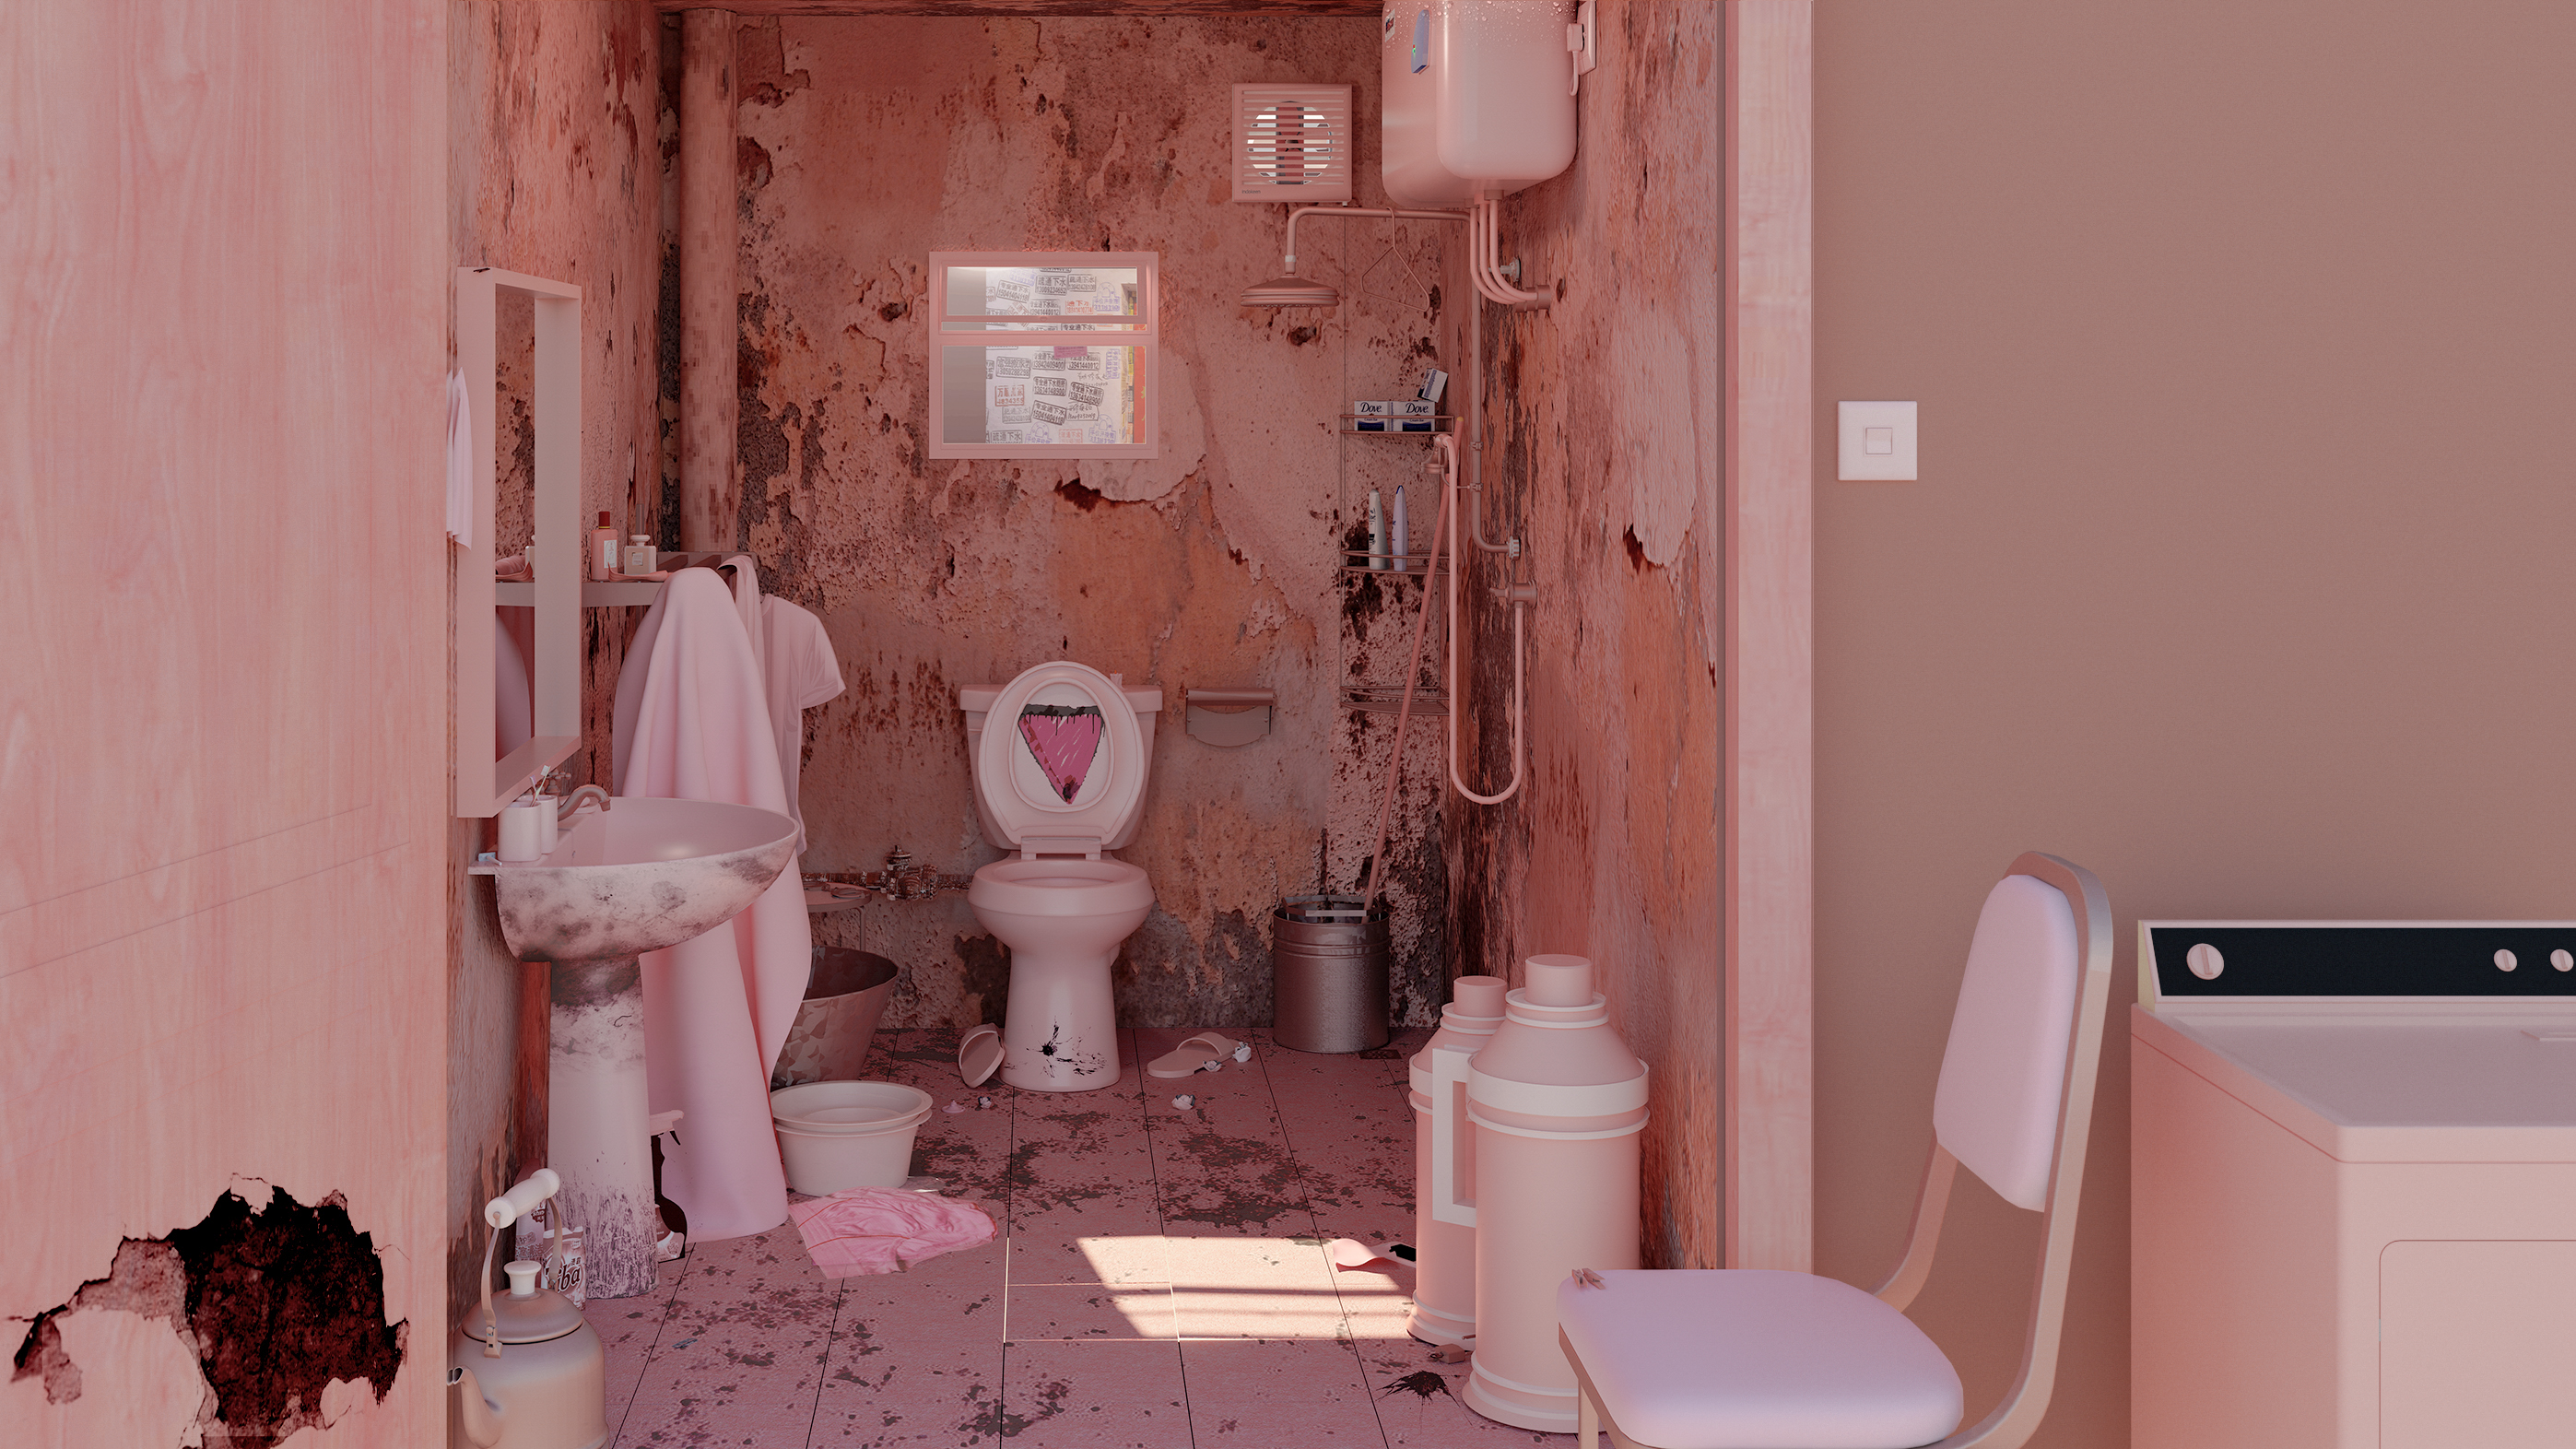 《pink room-一个组织》